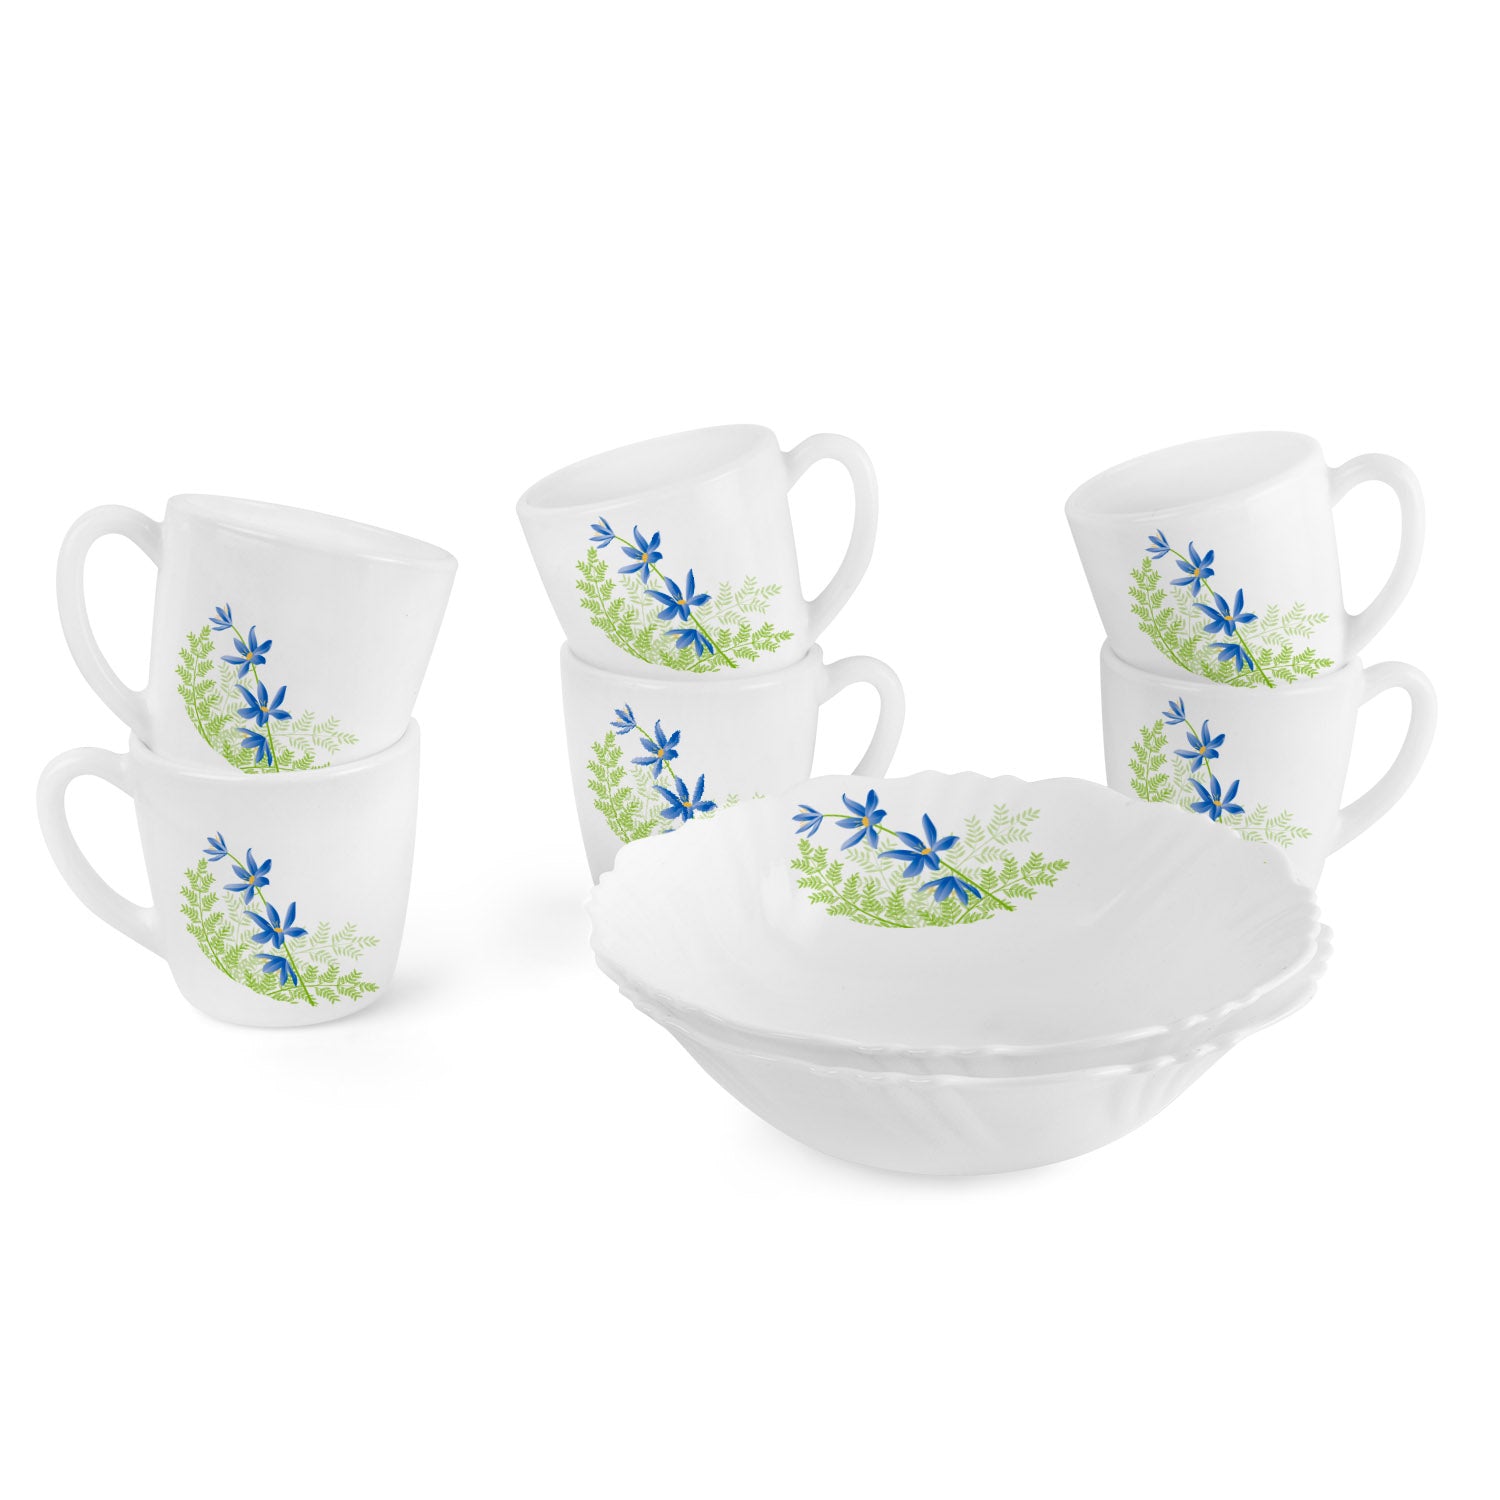 Imperial Series Quick Bite Bowl & Mug Gift set, 8 Pieces Blue Primerose / 8 Pieces